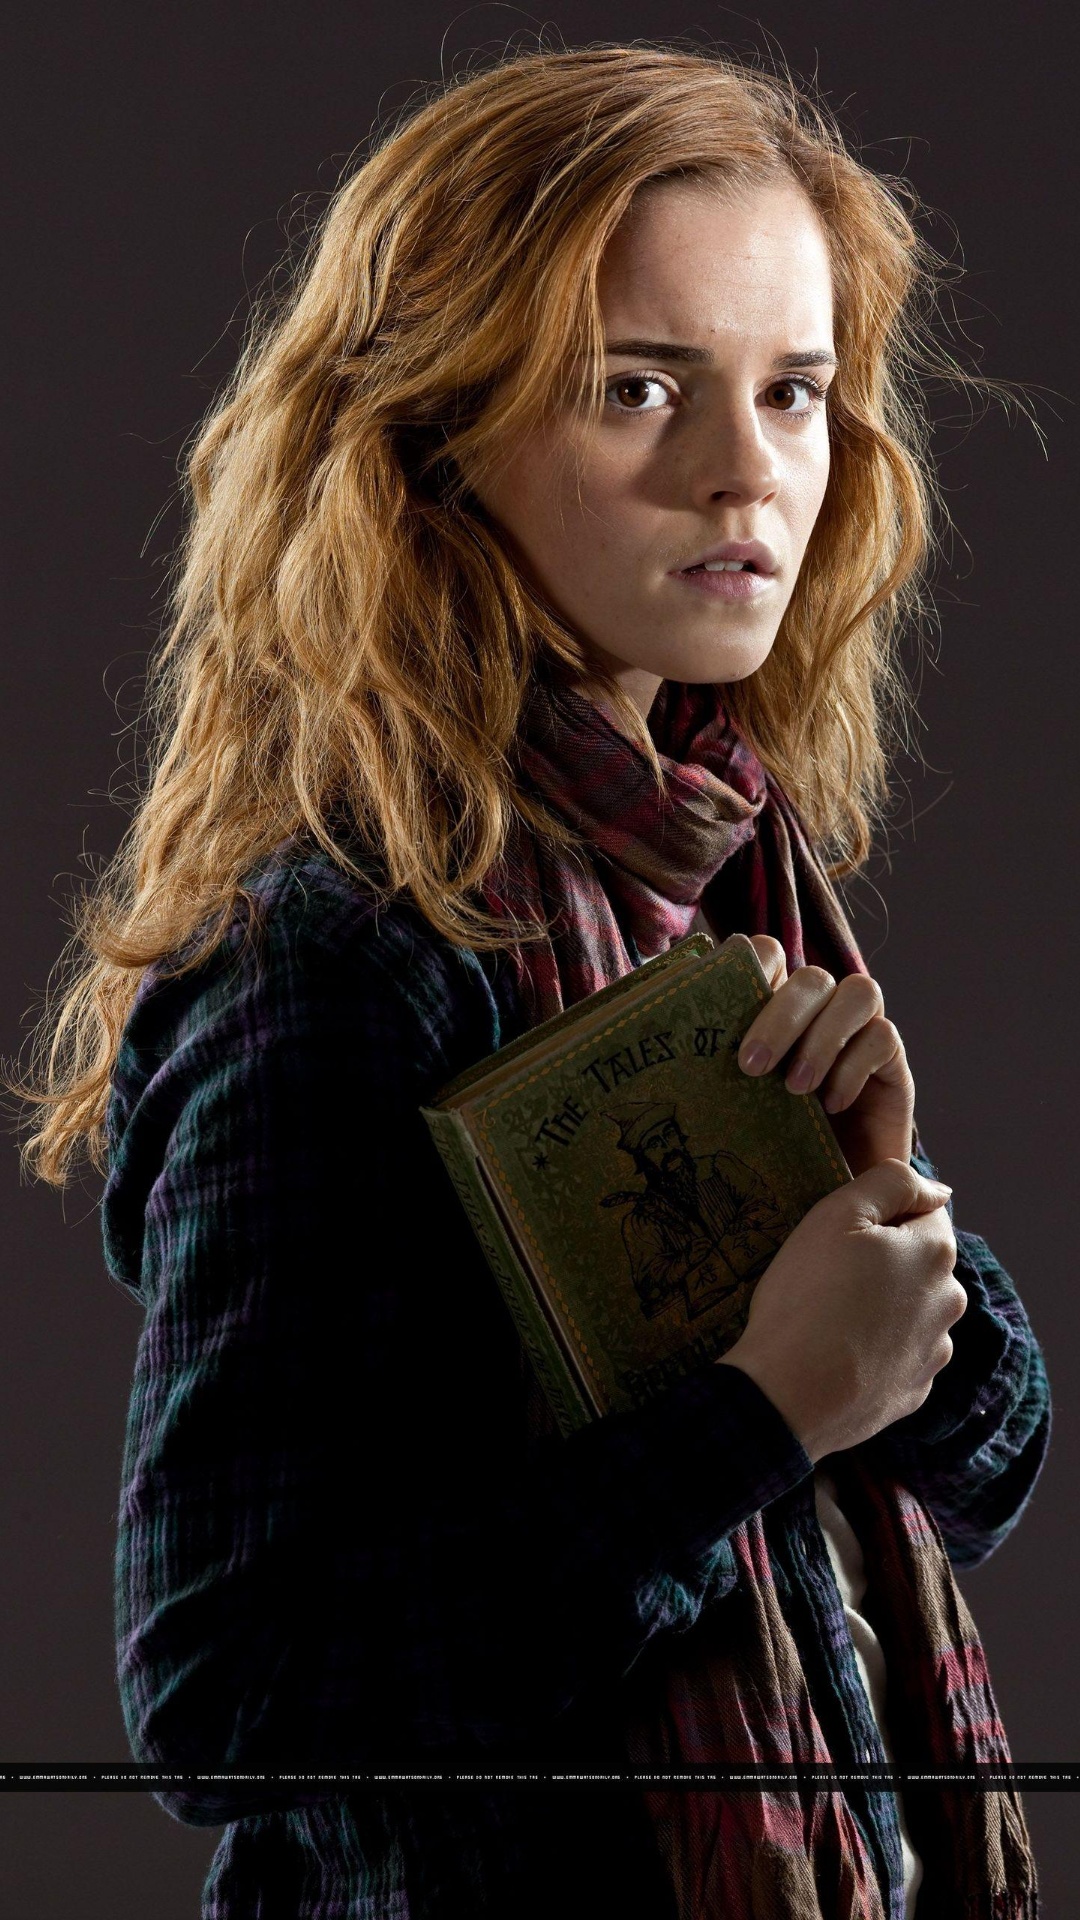 Hermione Granger iPhone Wallpaper